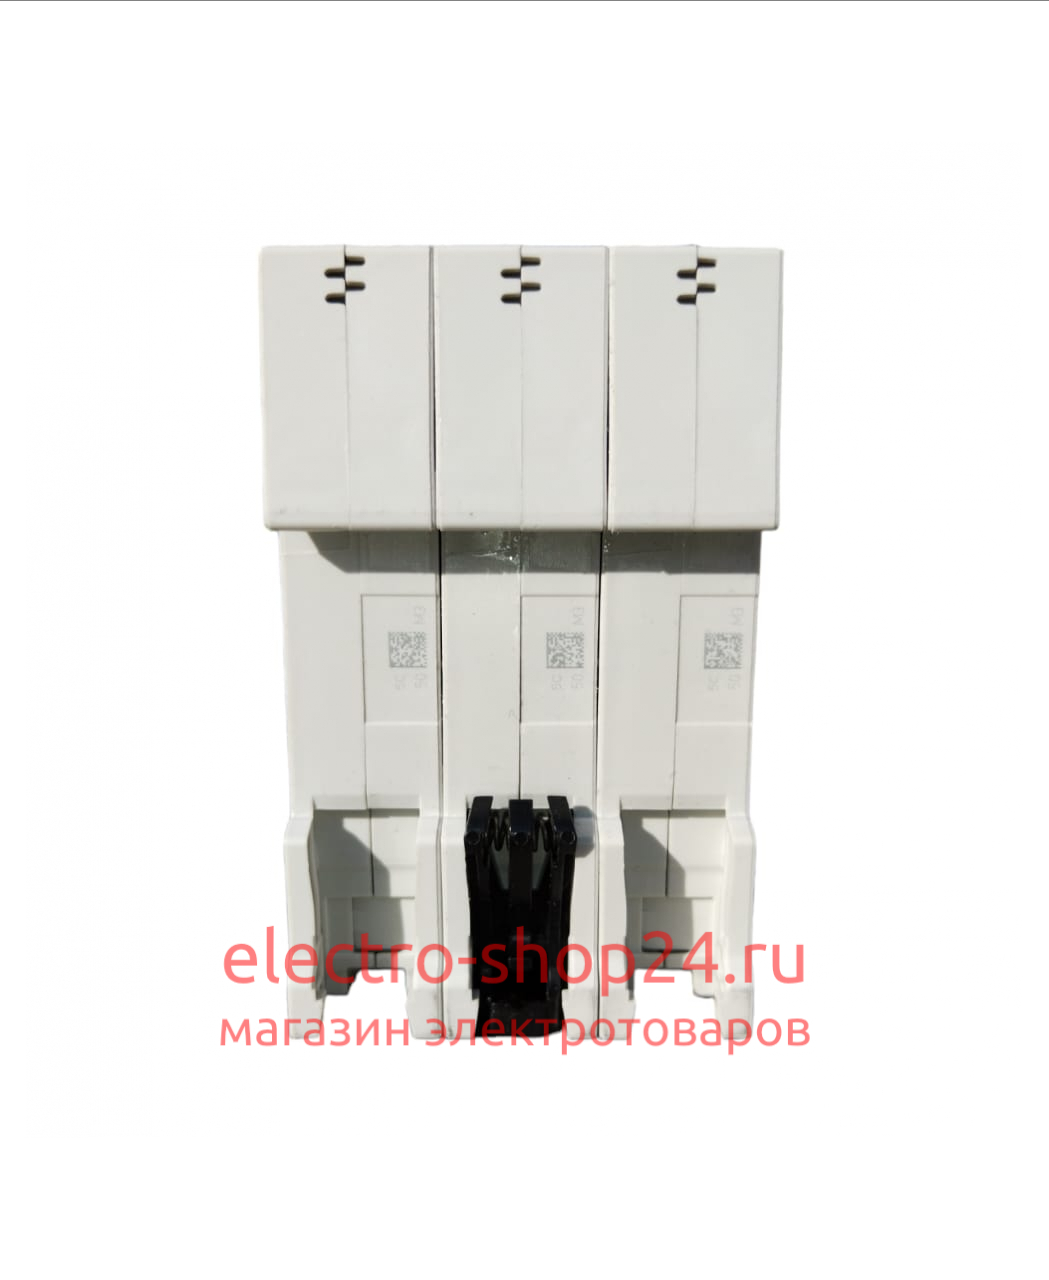 SH203L C32 Автоматический выключатель 3-полюсный 32А 4,5кА (хар-ка C) ABB 2CDS243001R0324 2CDS243001R0324 - магазин электротехники Electroshop